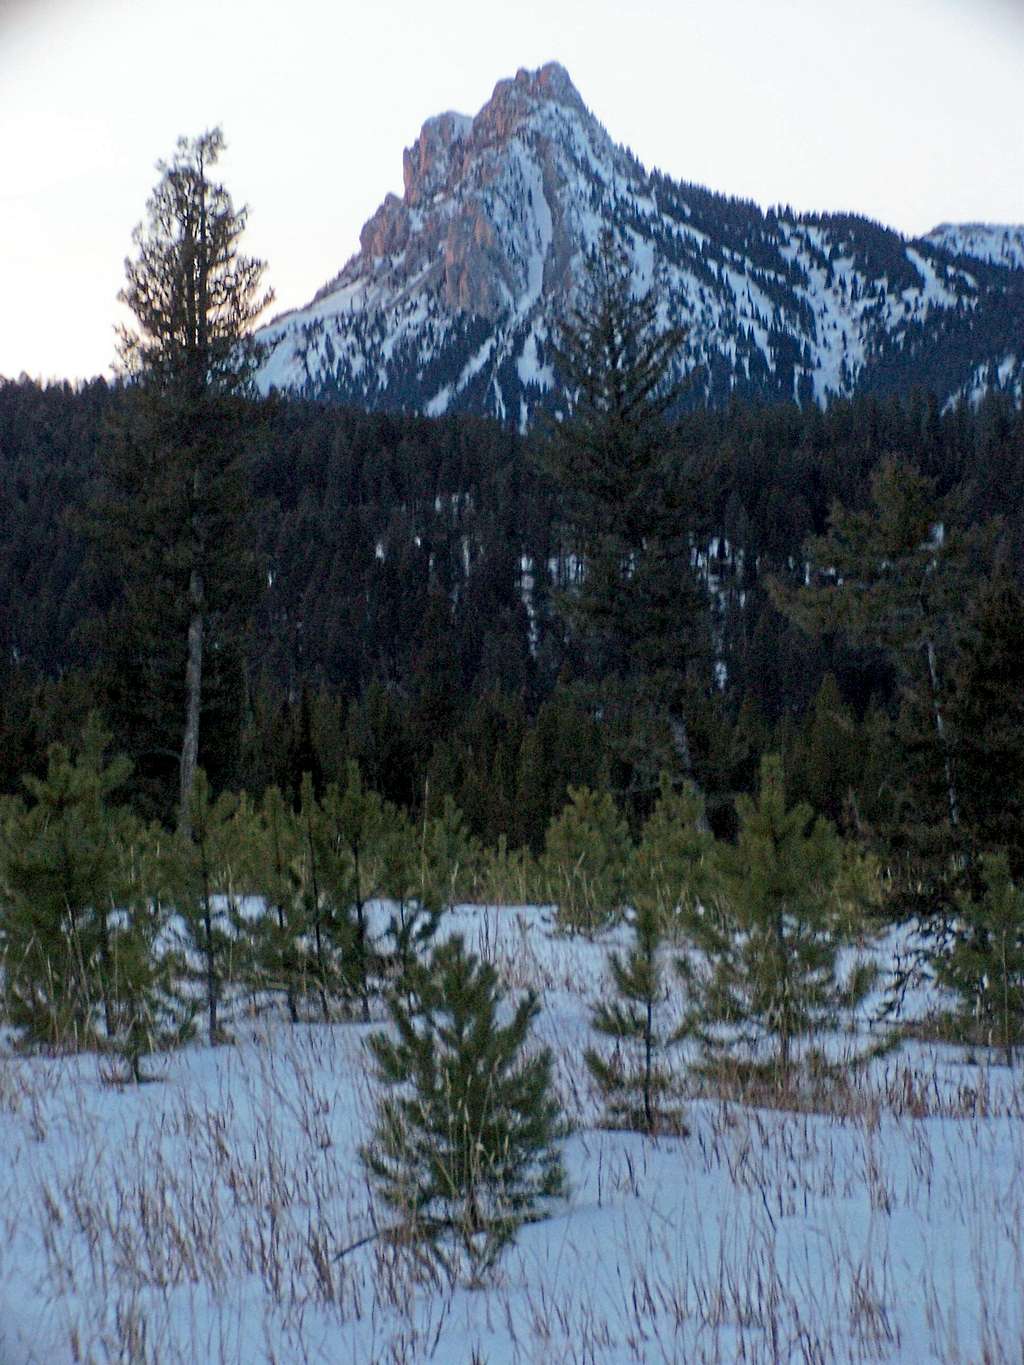 Ross Peak, Full view